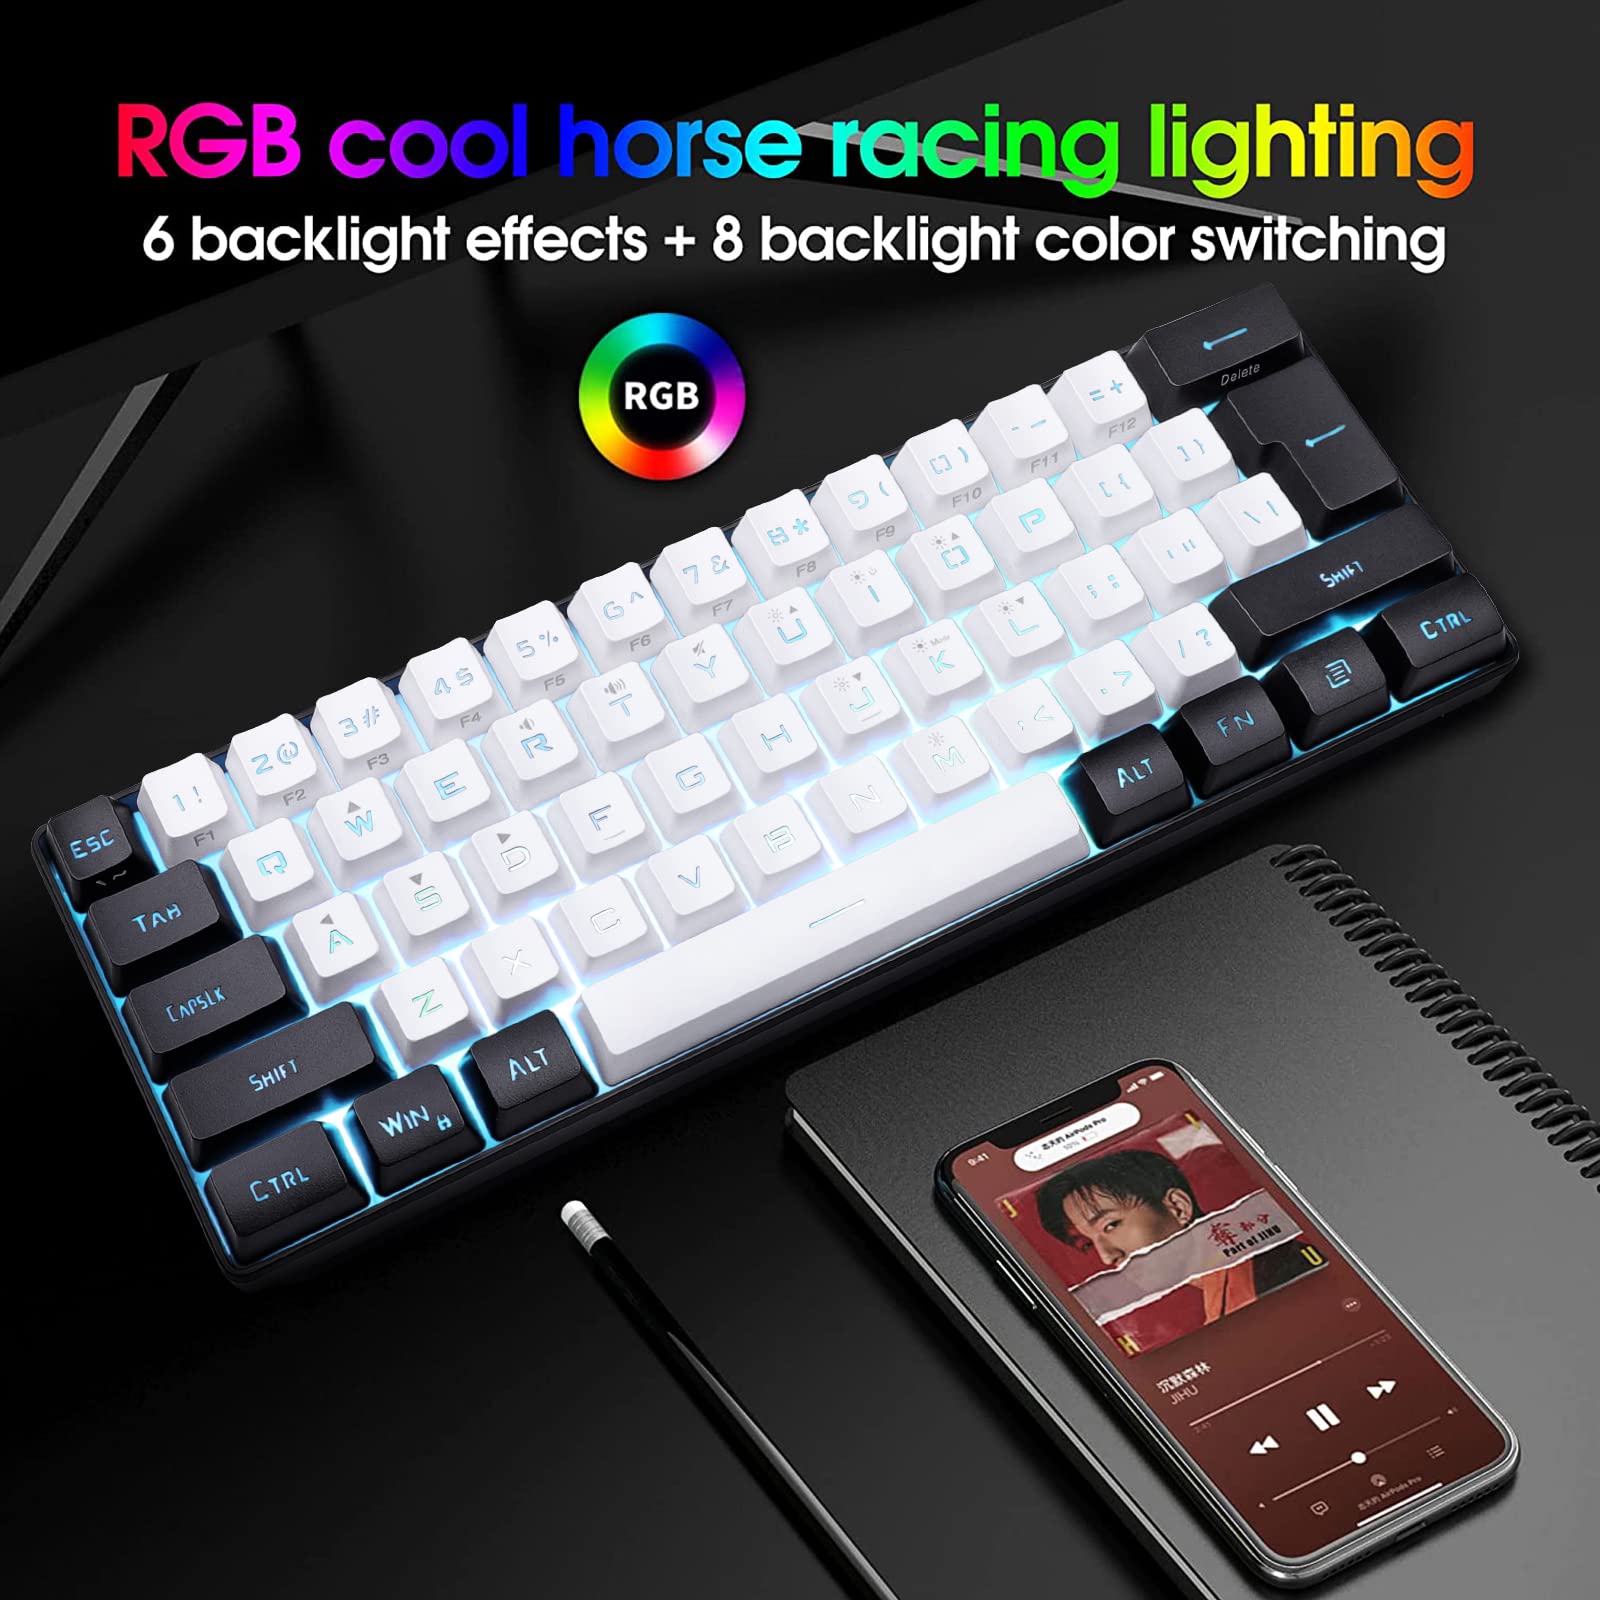 CTBTBESE 60% Wired Gaming Keyboard, RGB Backlit Mechanical Feeling Keyboard, Ultra-Compact Mini Waterproof Keyboard for PC Computer Gamer White and Black (White/Black)